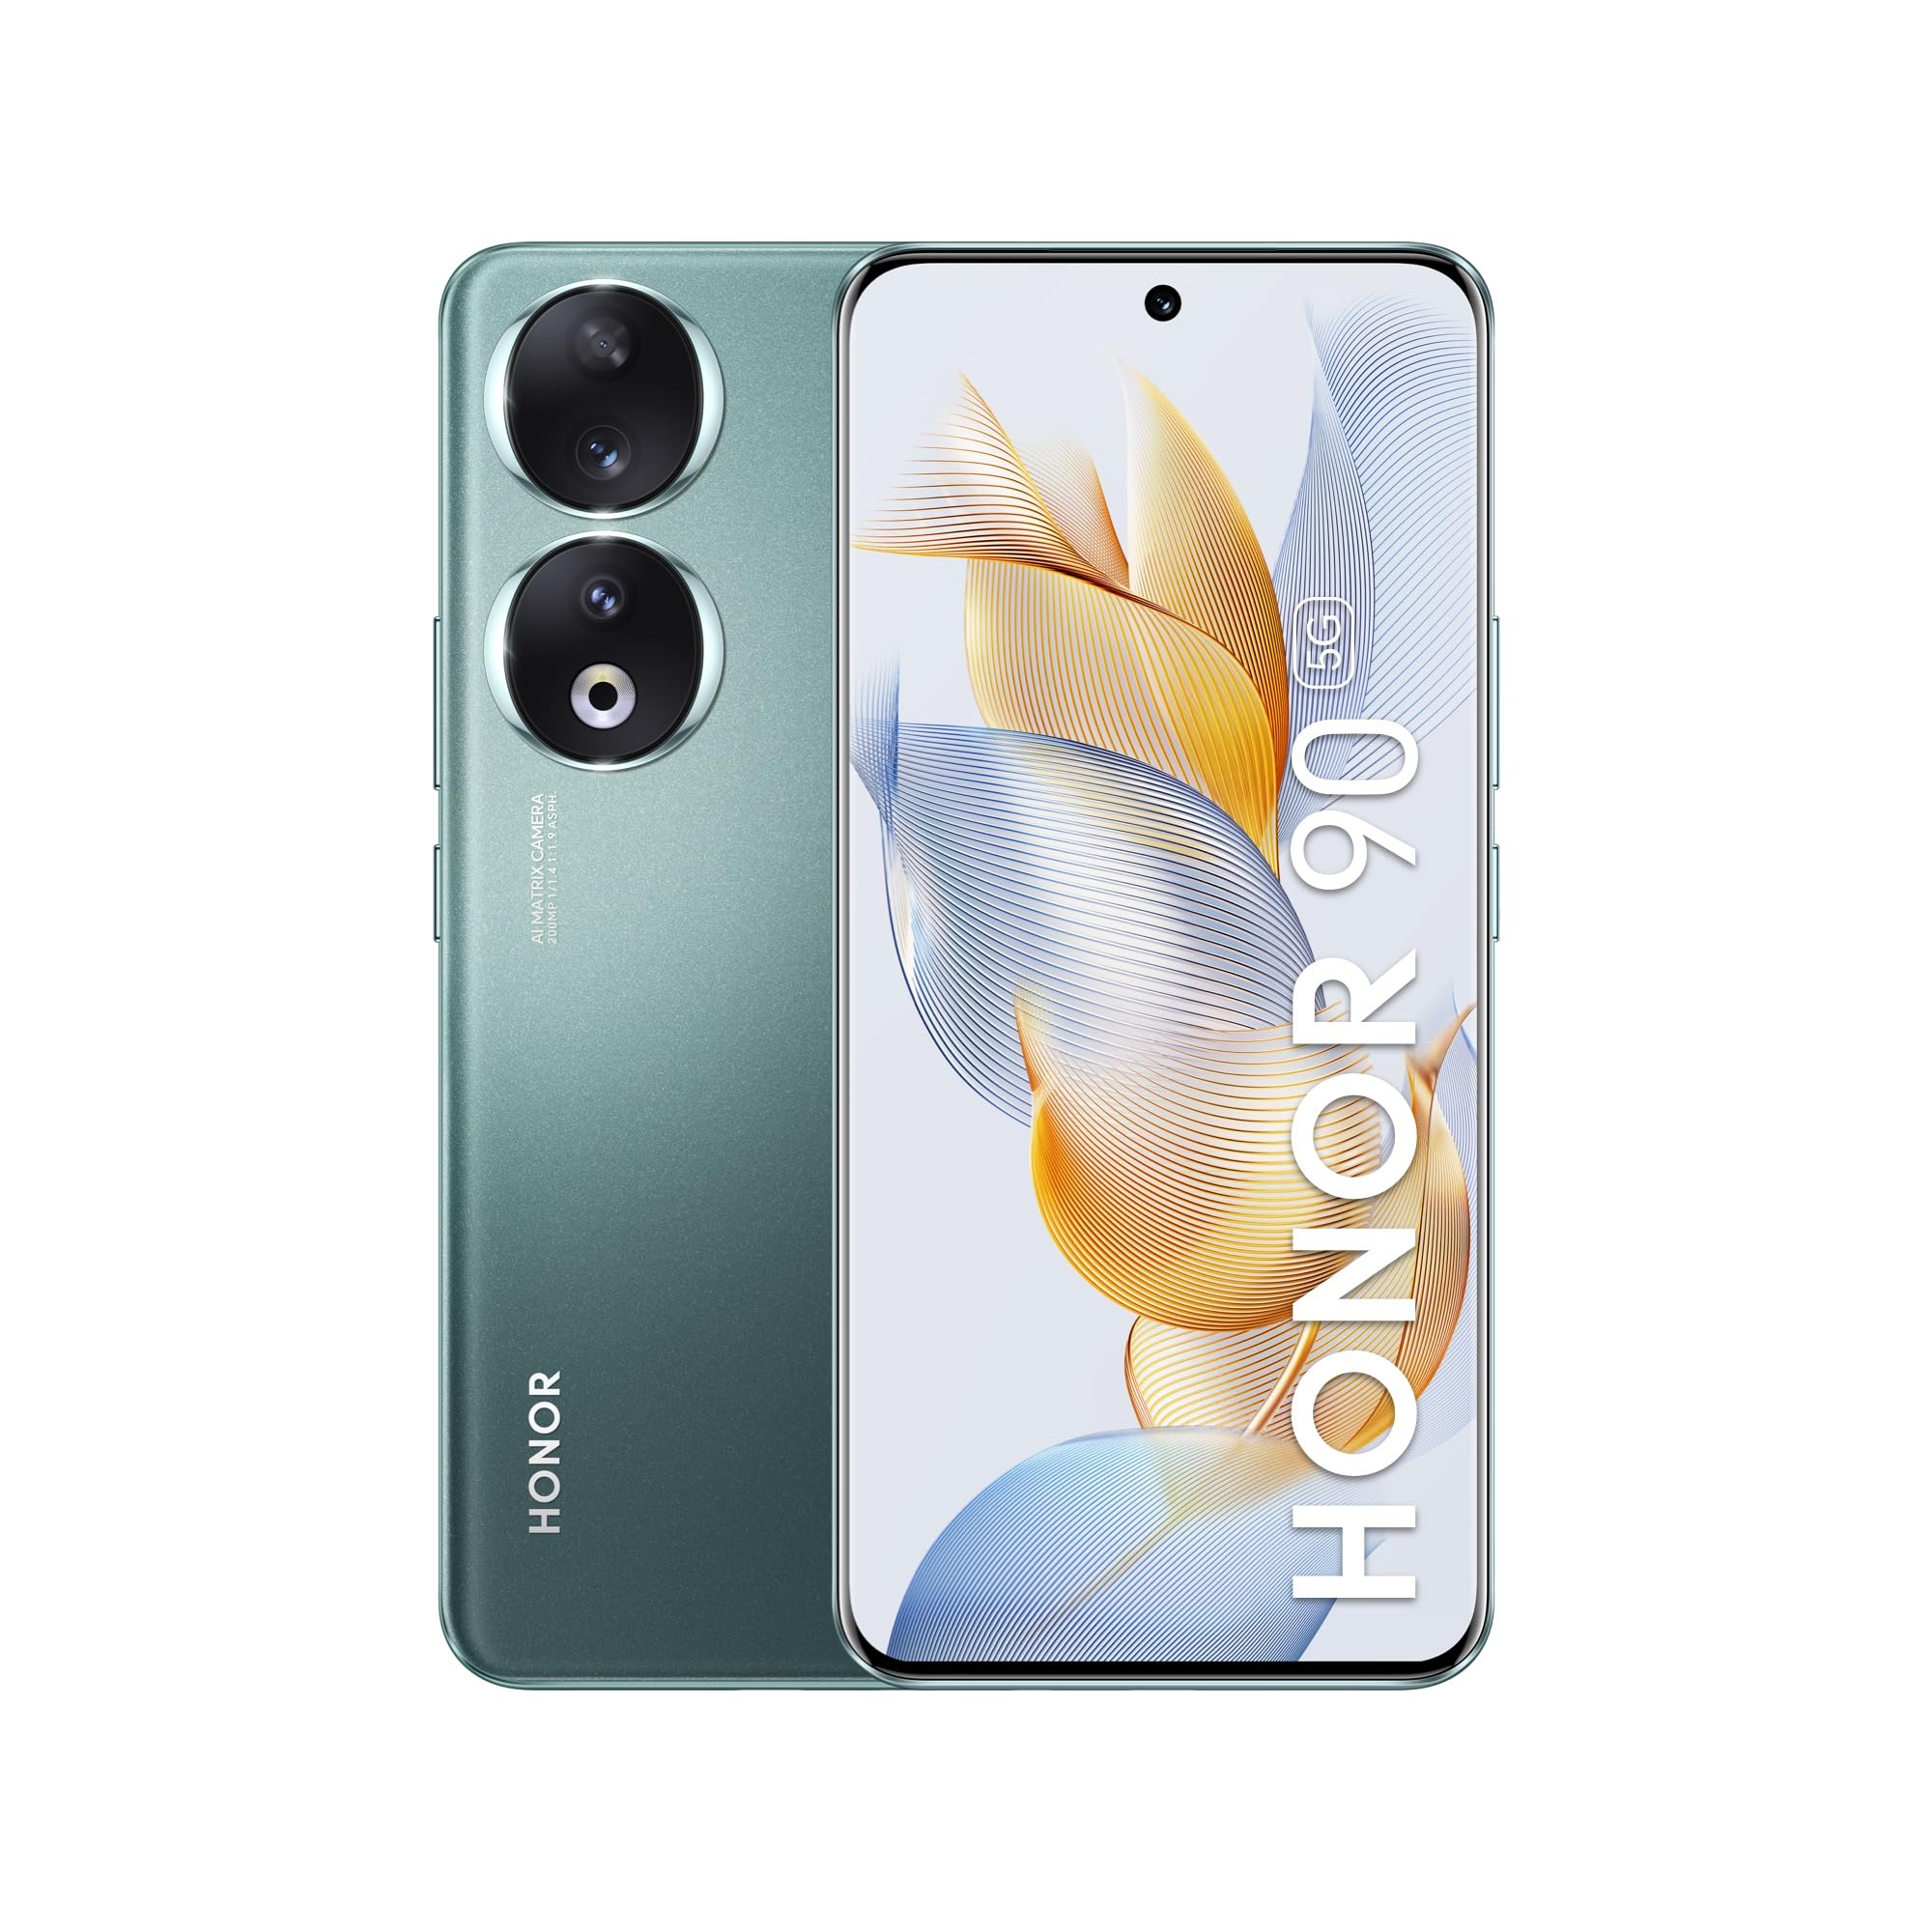 Honor 90 Dual-SIM 512GB ROM + 12GB RAM (Only GSM | No CDMA) Factory Unlocked 5G Smartphone (Emerald Green) - International Version